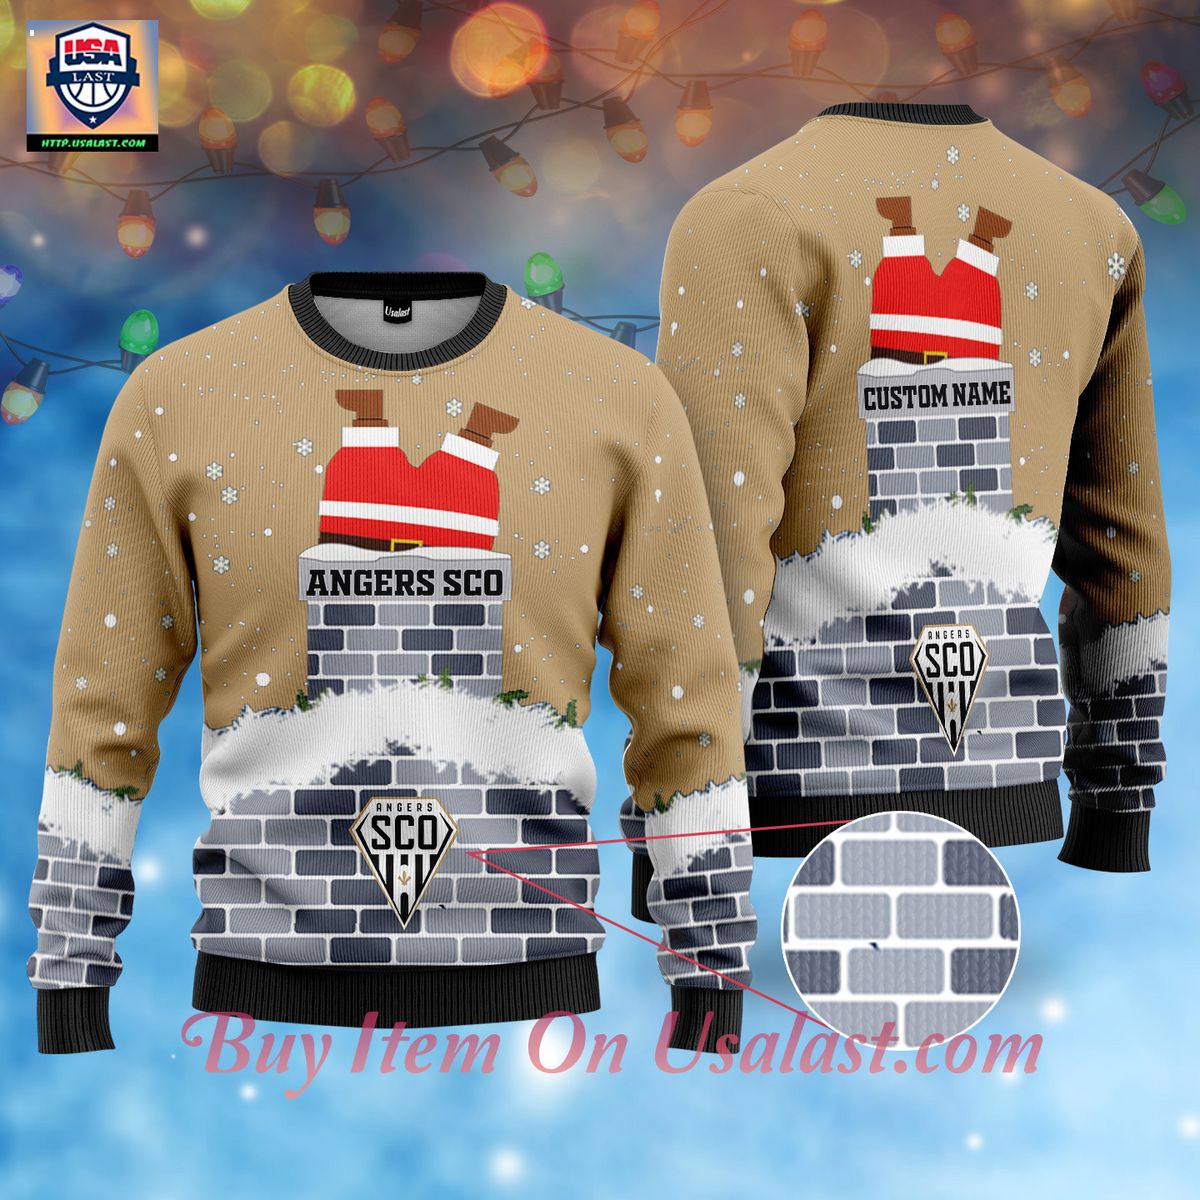 Here’s Angers SCO Santa Claus Custom Name Ugly Christmas Sweater